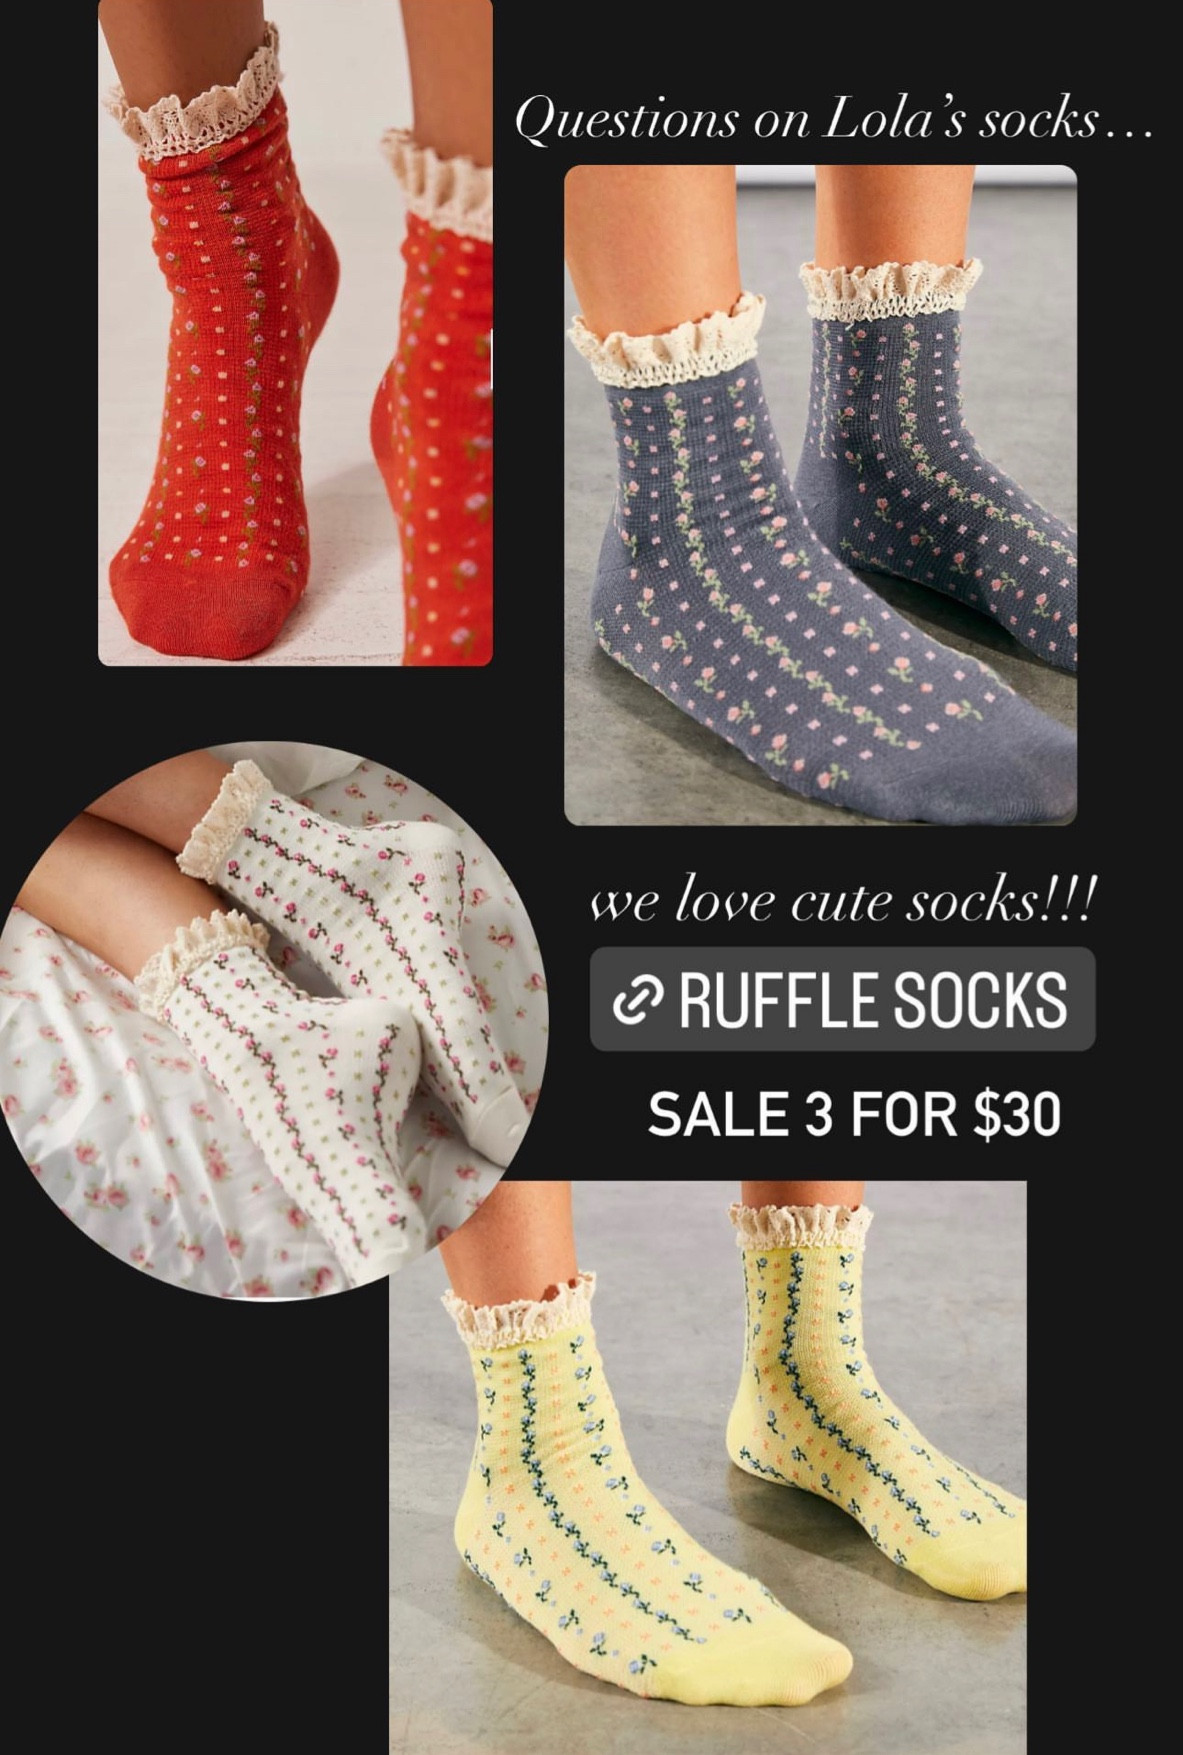 Movement Classic Ruffle Socks